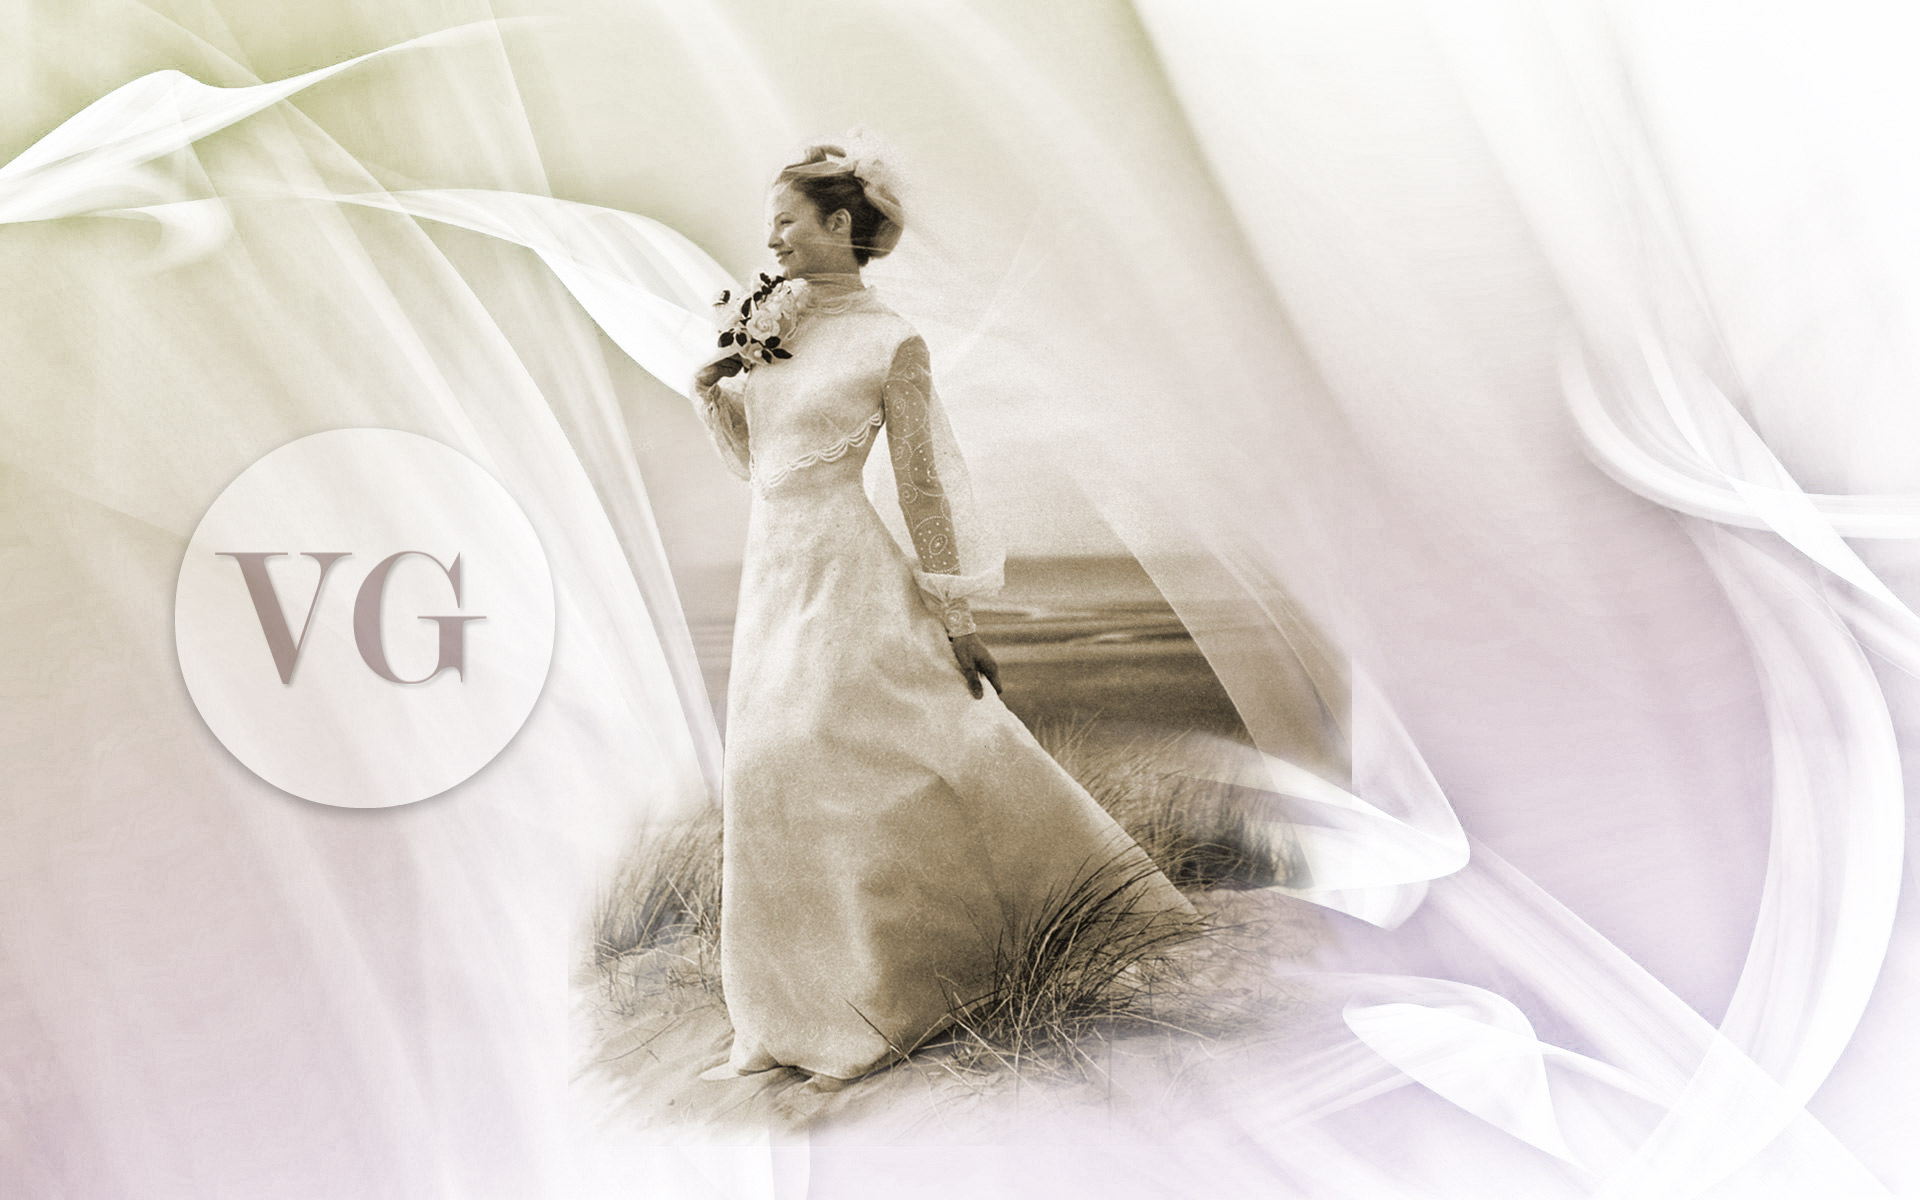 Should You Wear a Long or Short Wedding Veil? About Veil Lengths – One  Blushing Bride Custom Wedding Veils